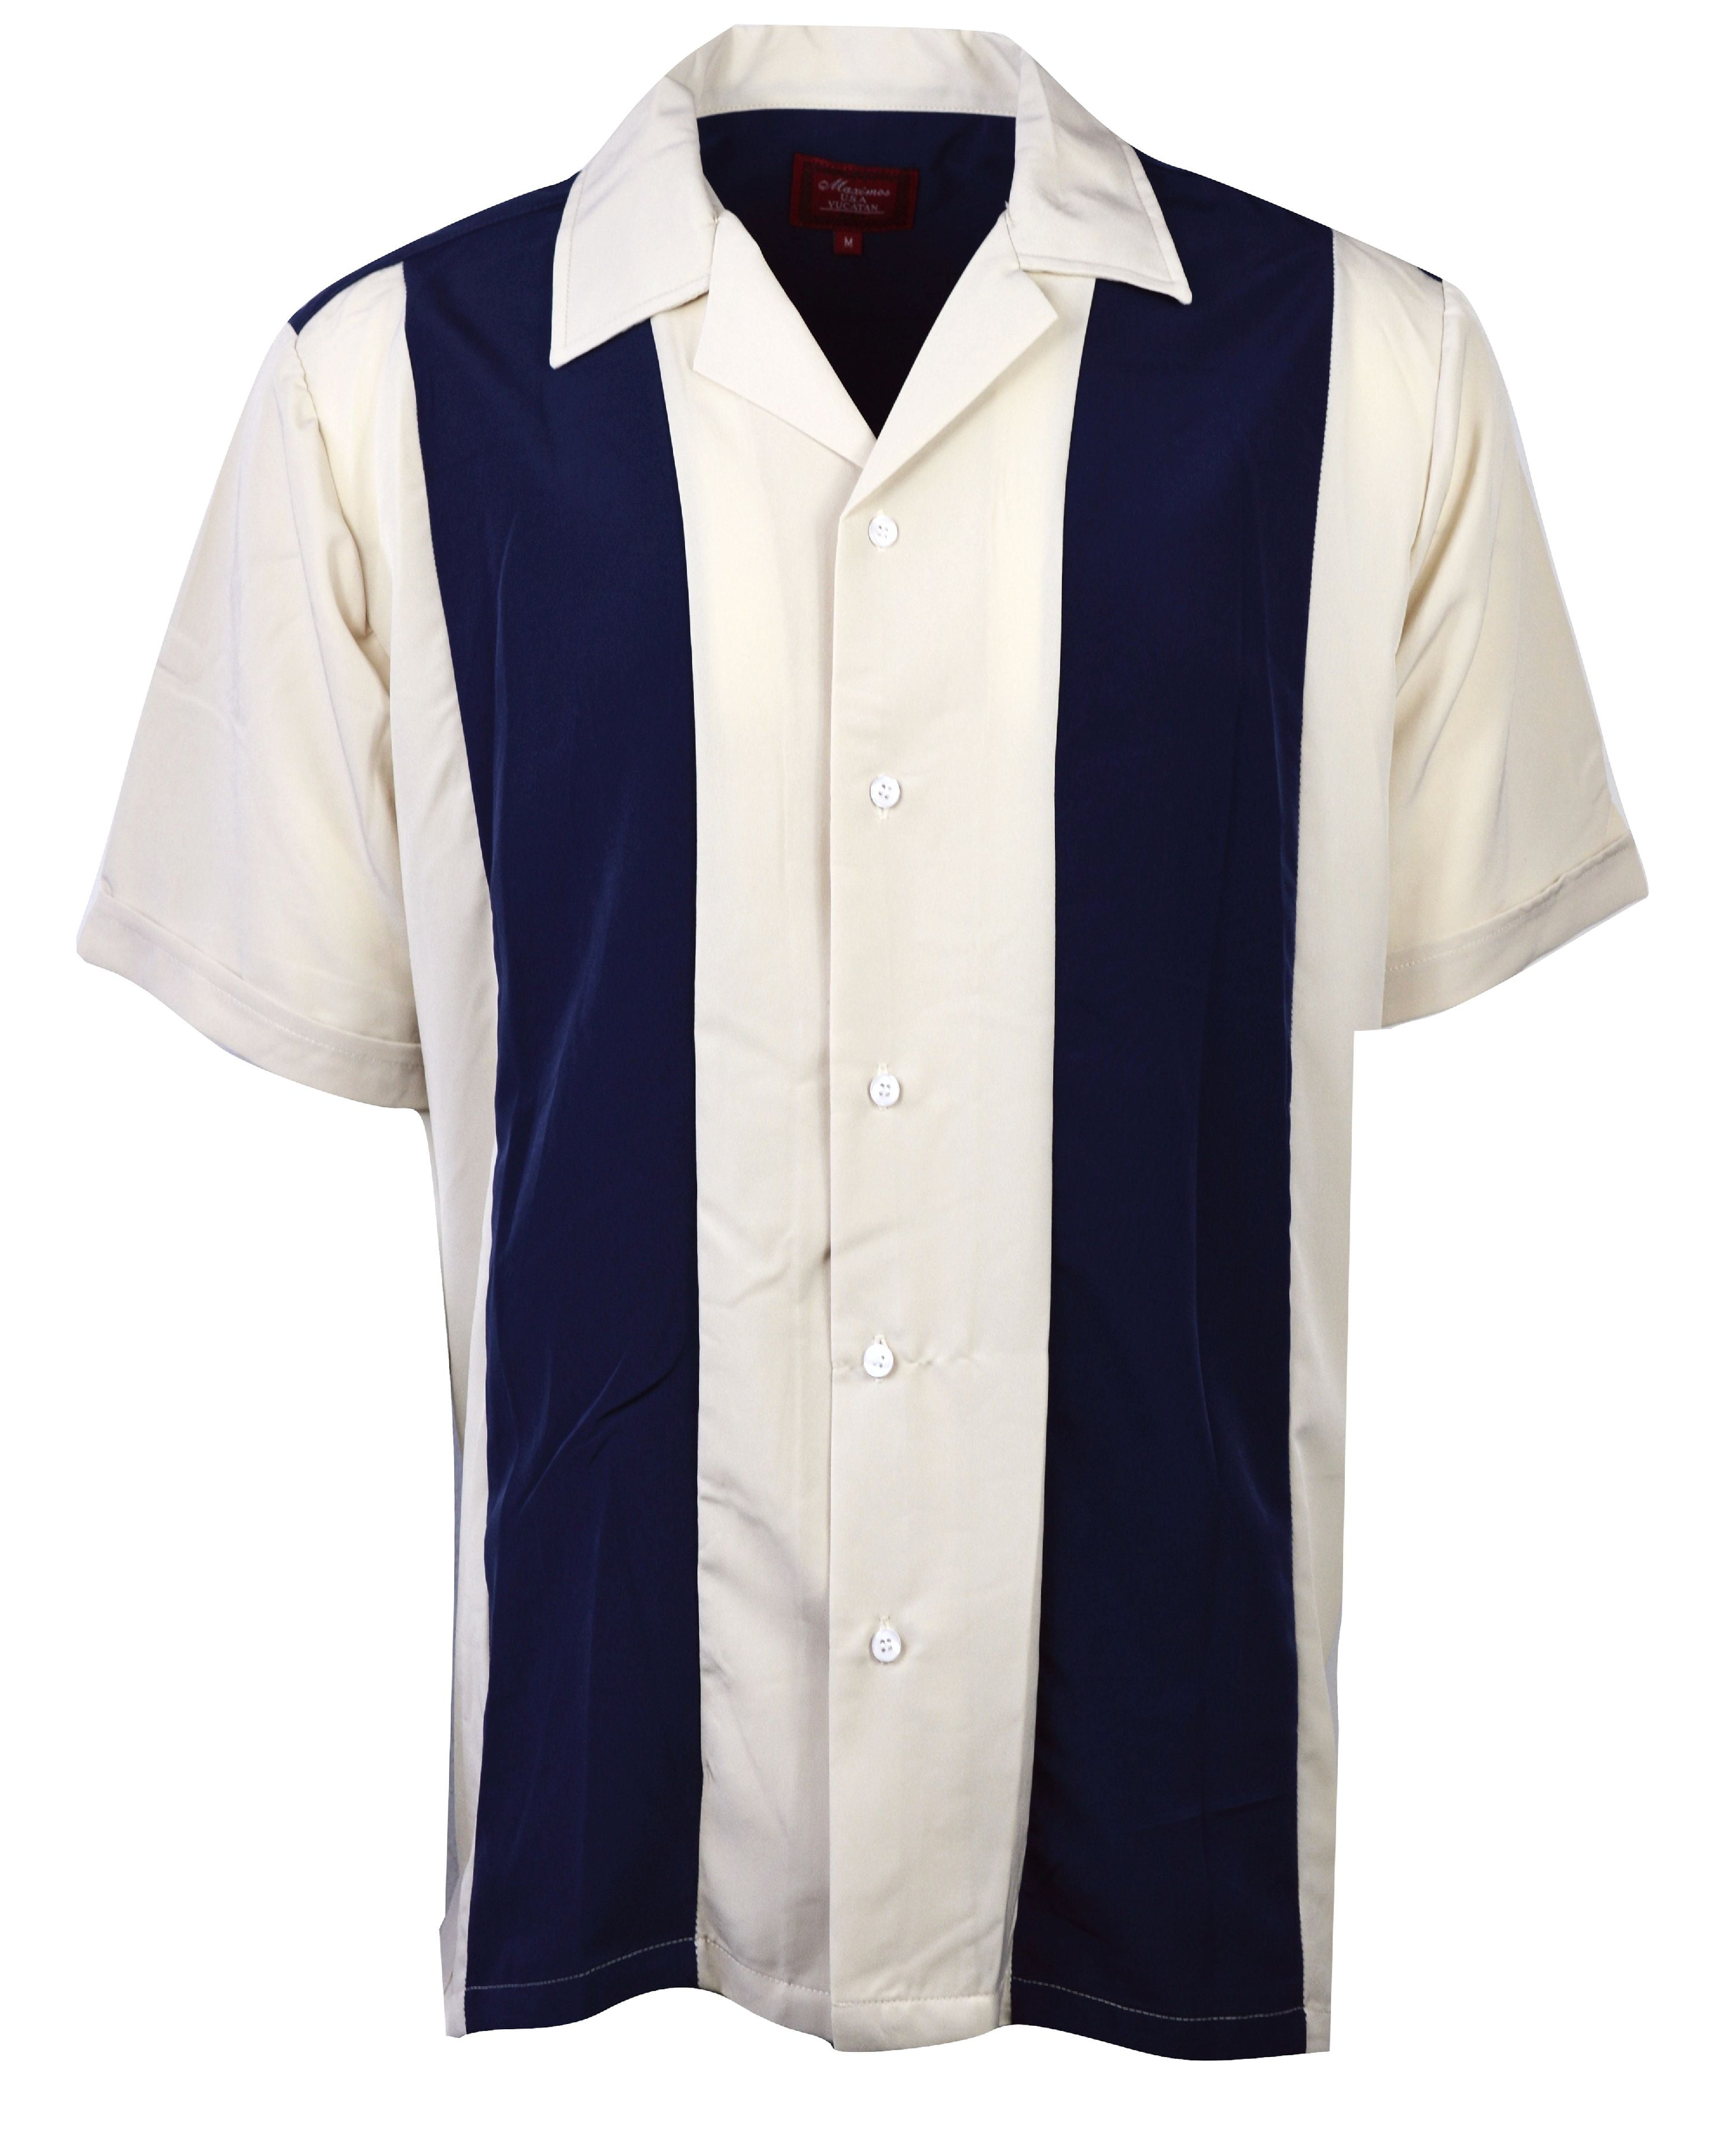 Maximos Men's Bowling Shirt Retro Button-Up Short Sleeved Striped Color